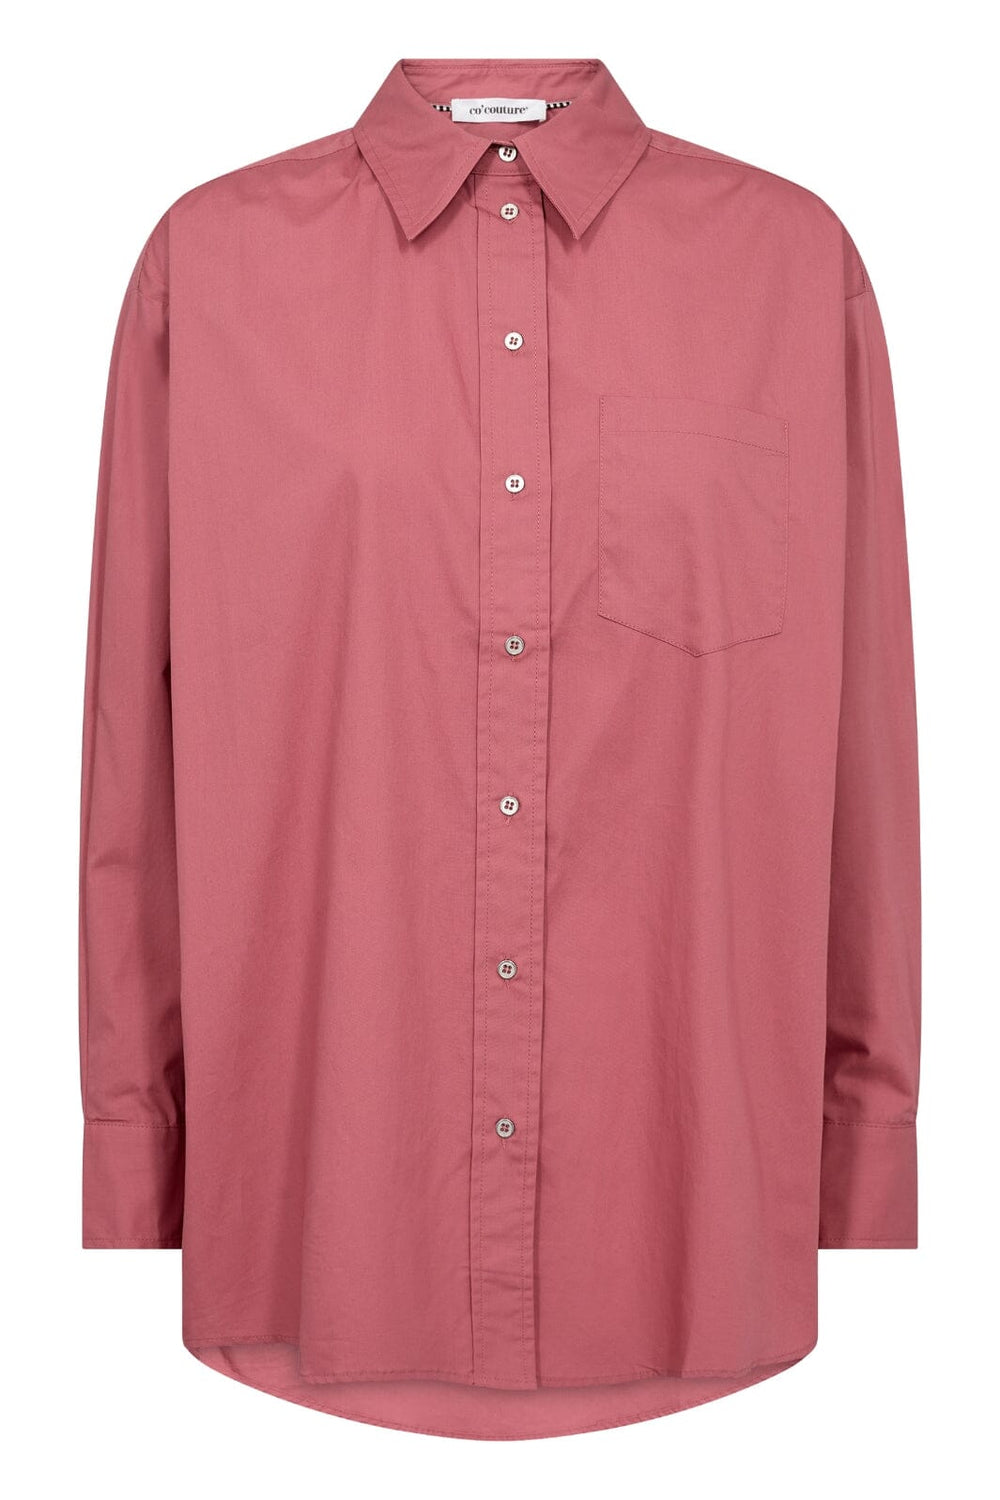 Forudbestilling - Co´couture - Coriscc Oversize Shirt 35408 - 528 Rhubarb Skjorter 